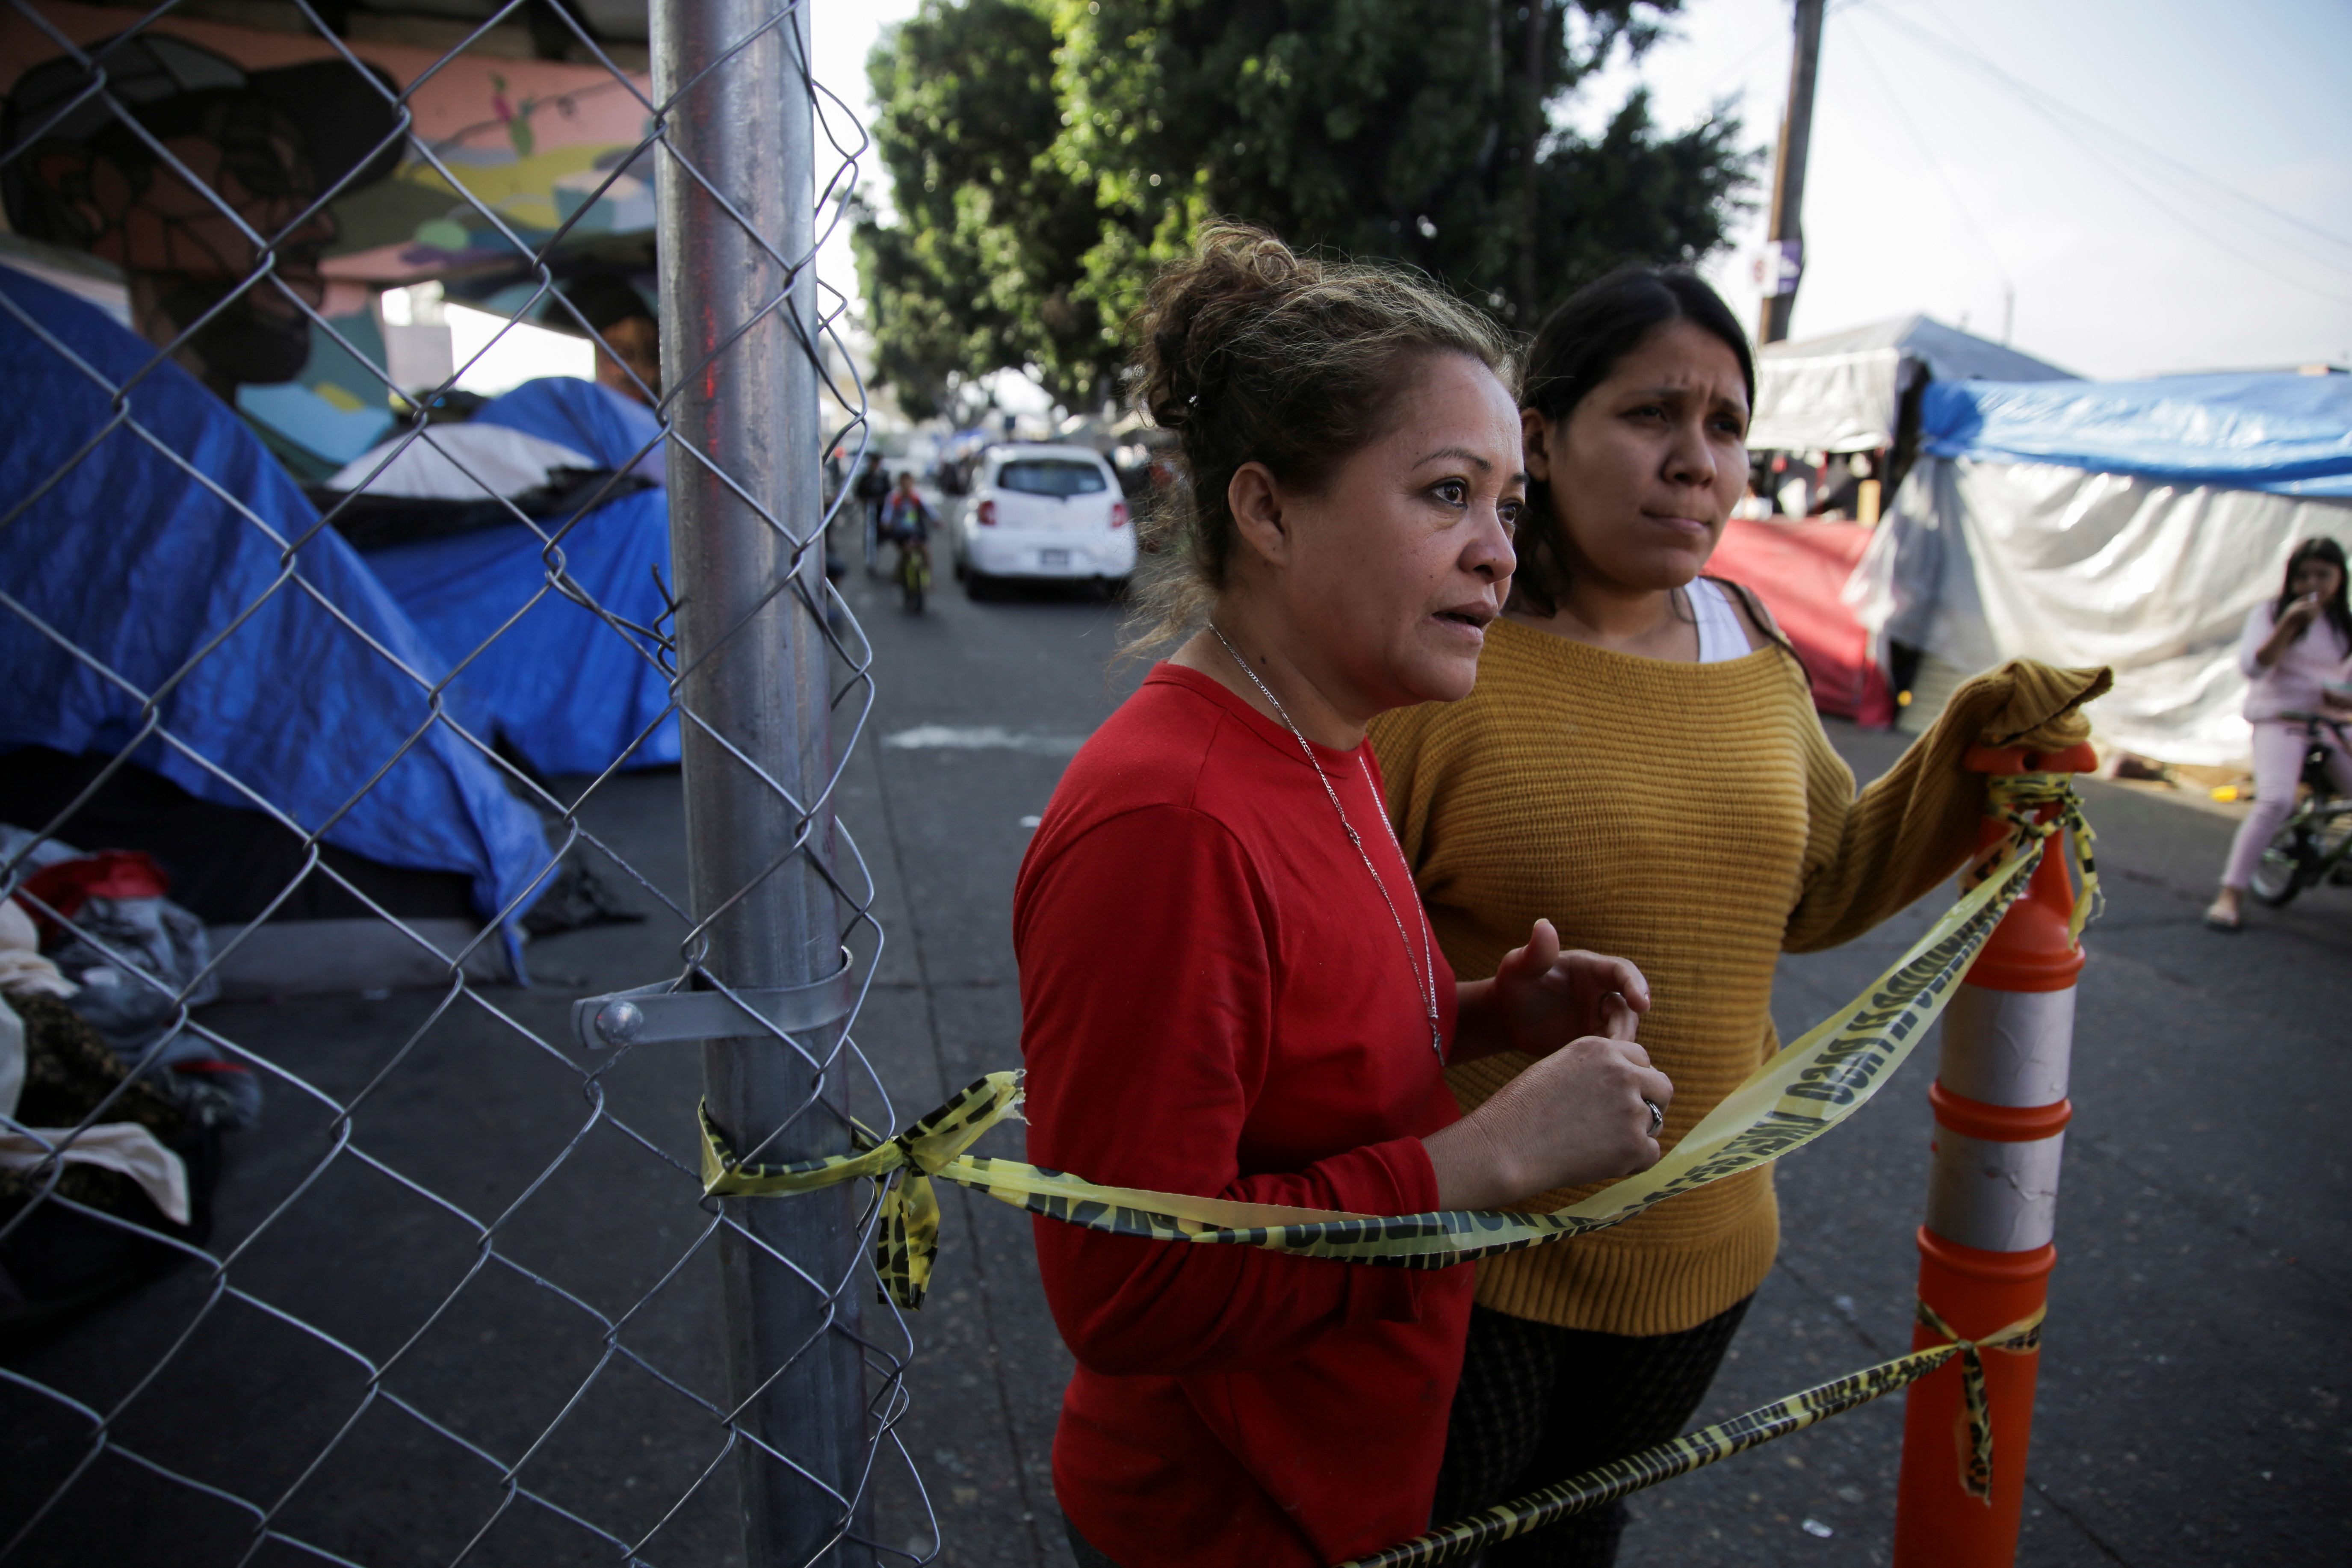 U.S. to restart Trump-era border program forcing asylum seekers to wait in Mexico